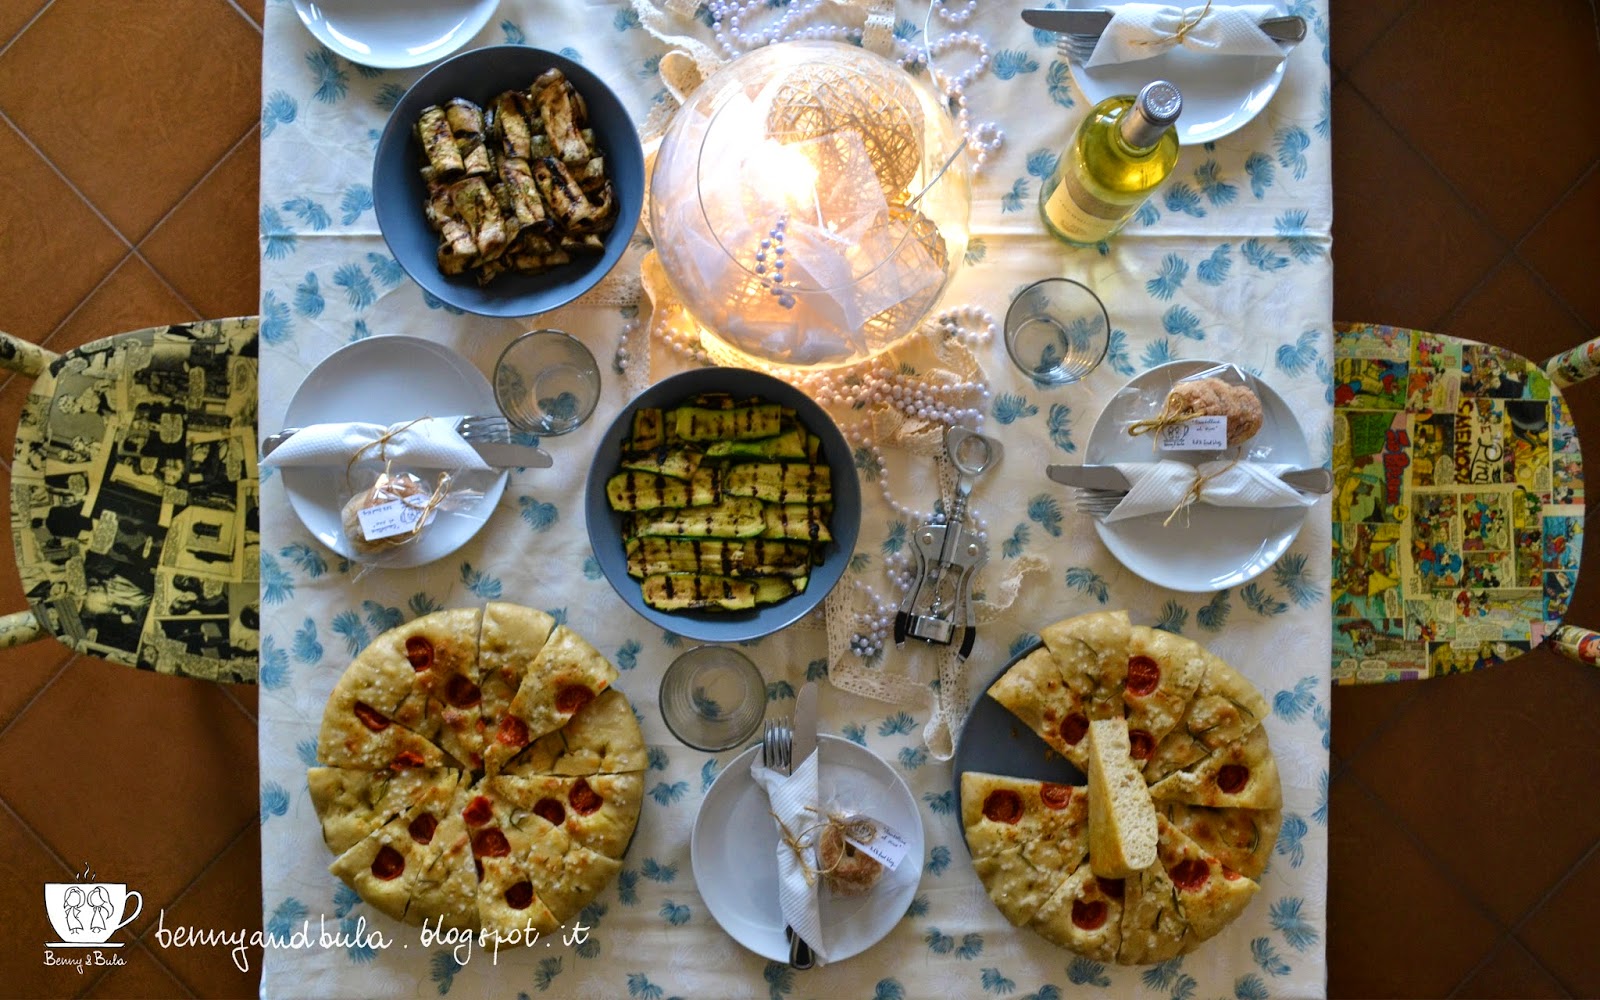 Vizeat eperience, social eating, host benny and bula, rome, italy